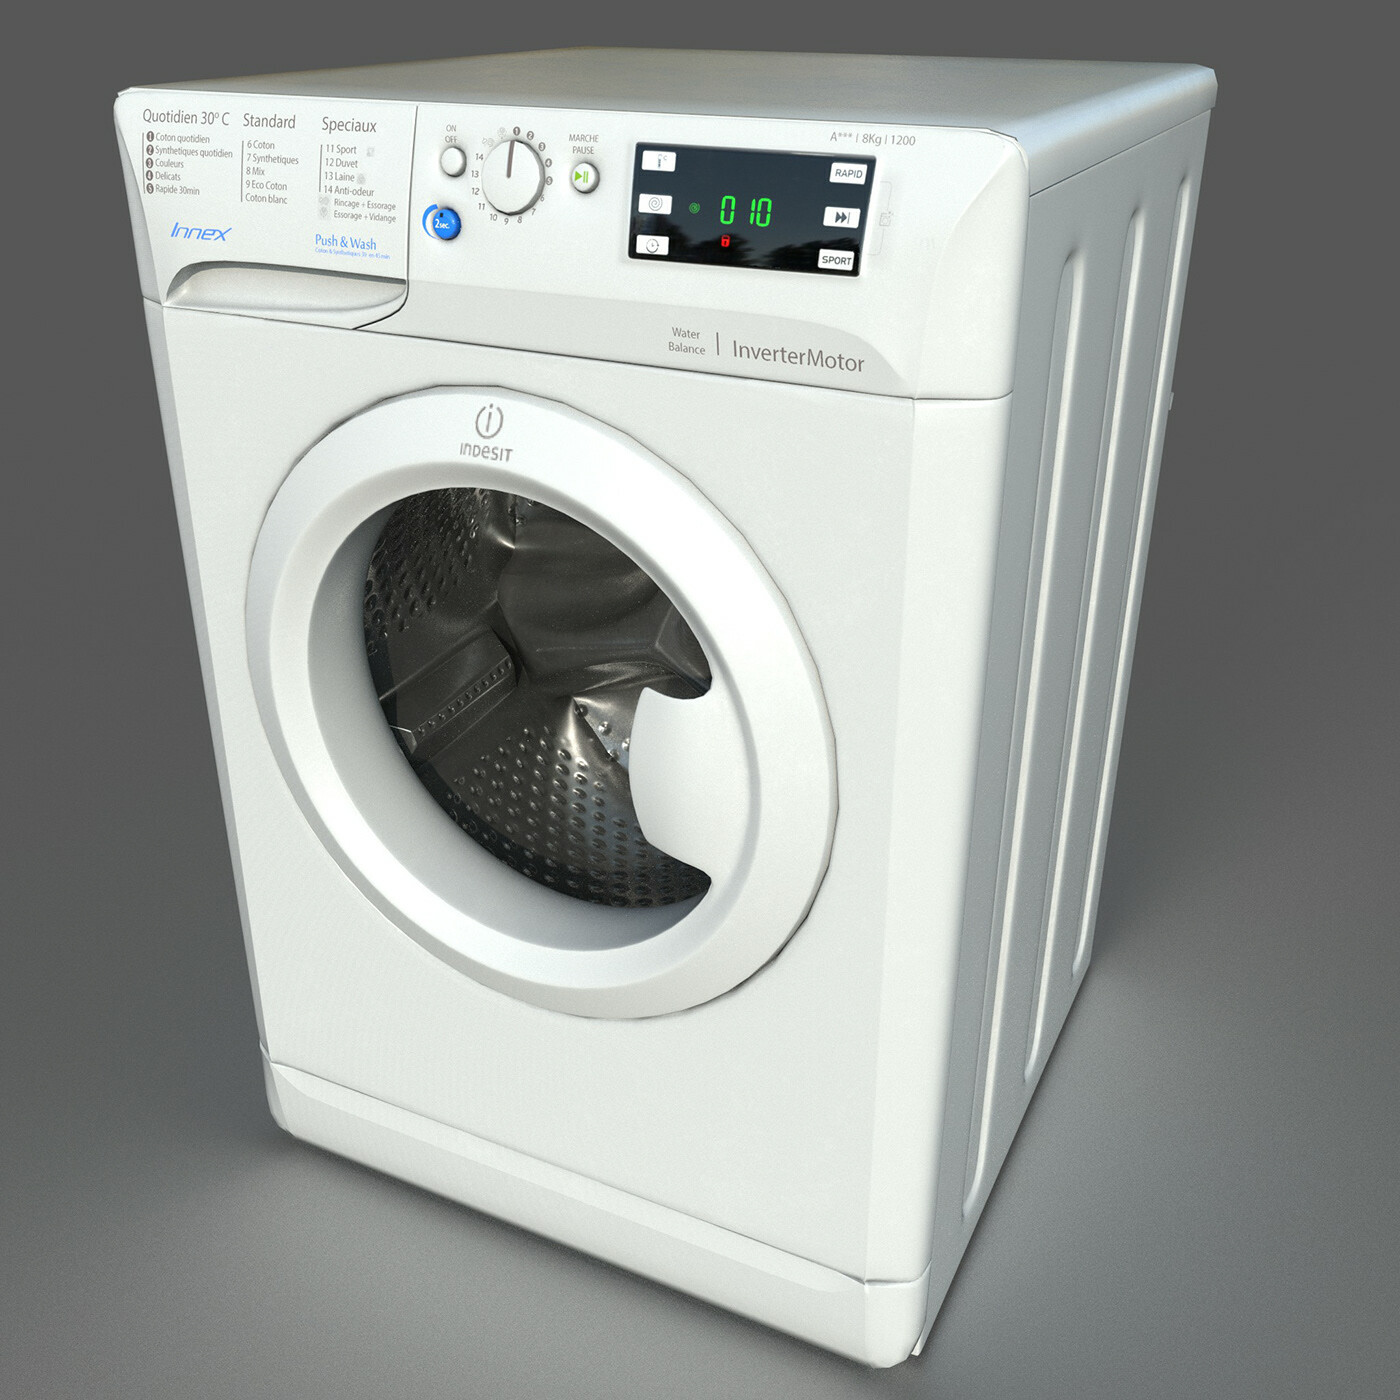 ArtStation - Washing machine for Ar app